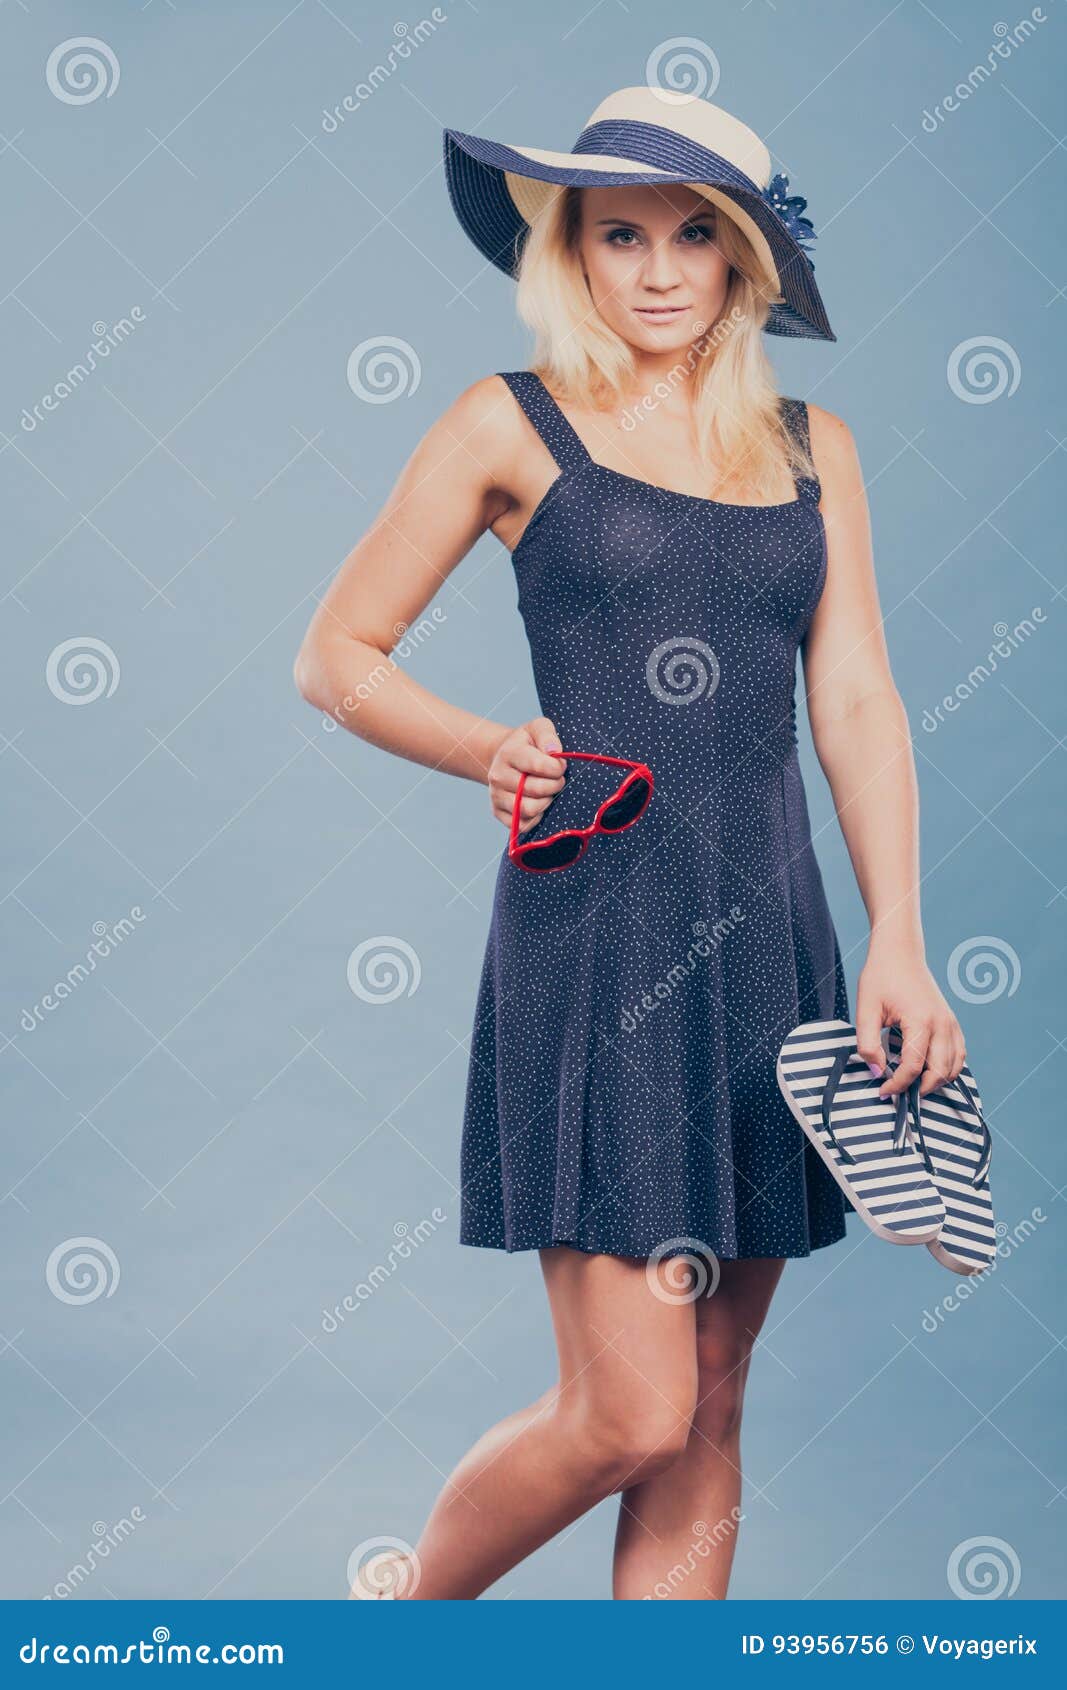 Woman Wearing Short Dress Holding Flip Flops and Sunglasses Stock Photo ...